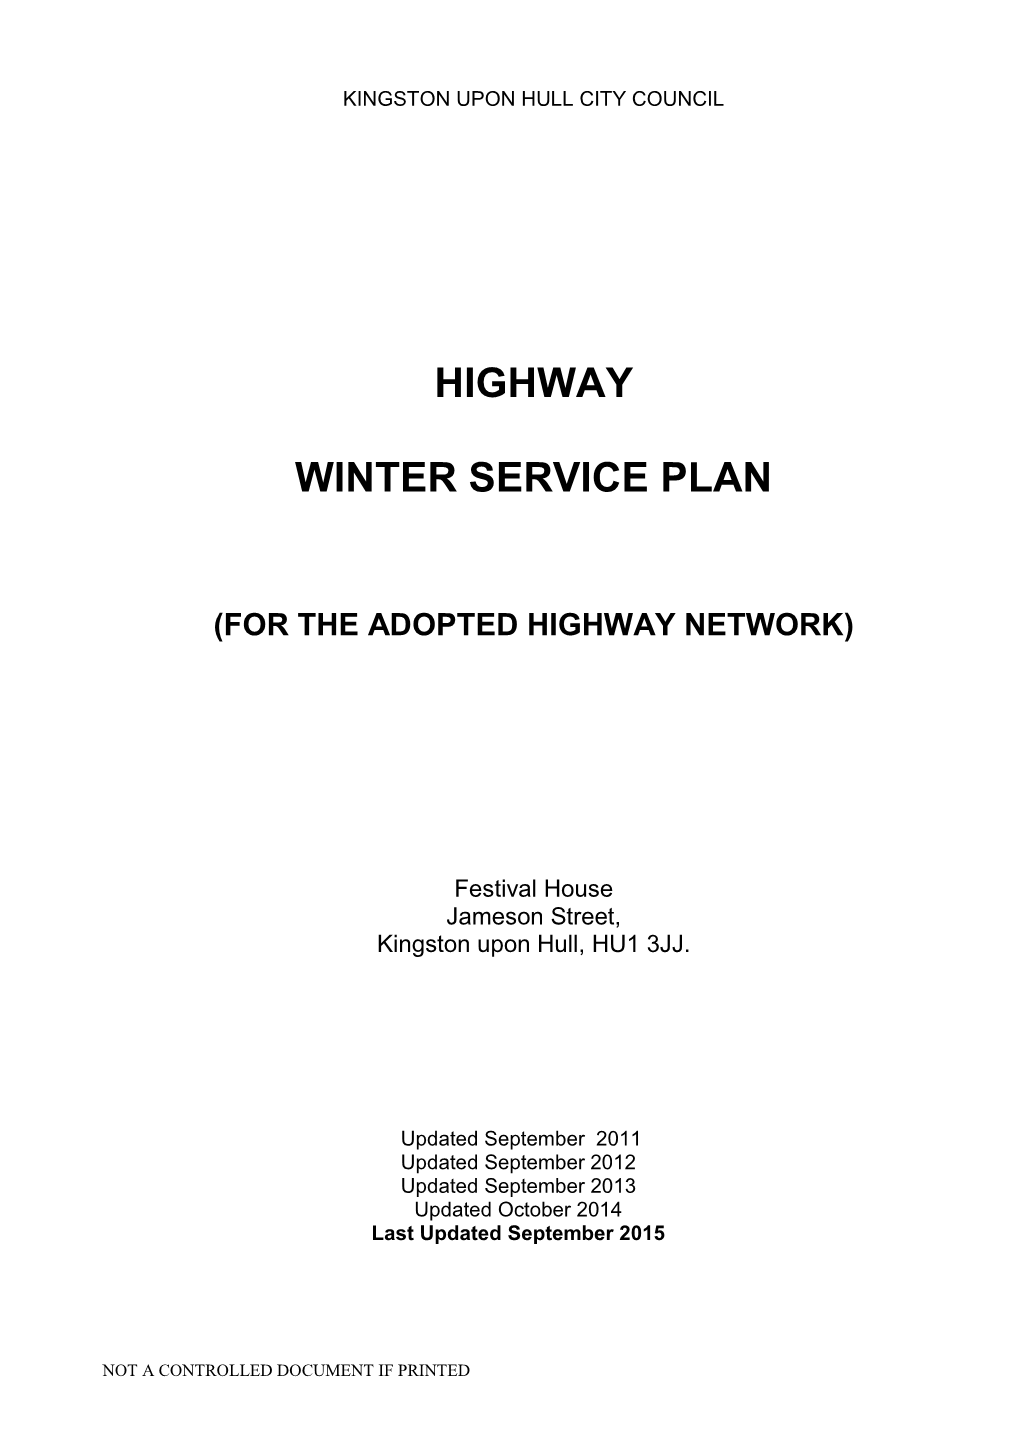 Highway Winter Service Plan